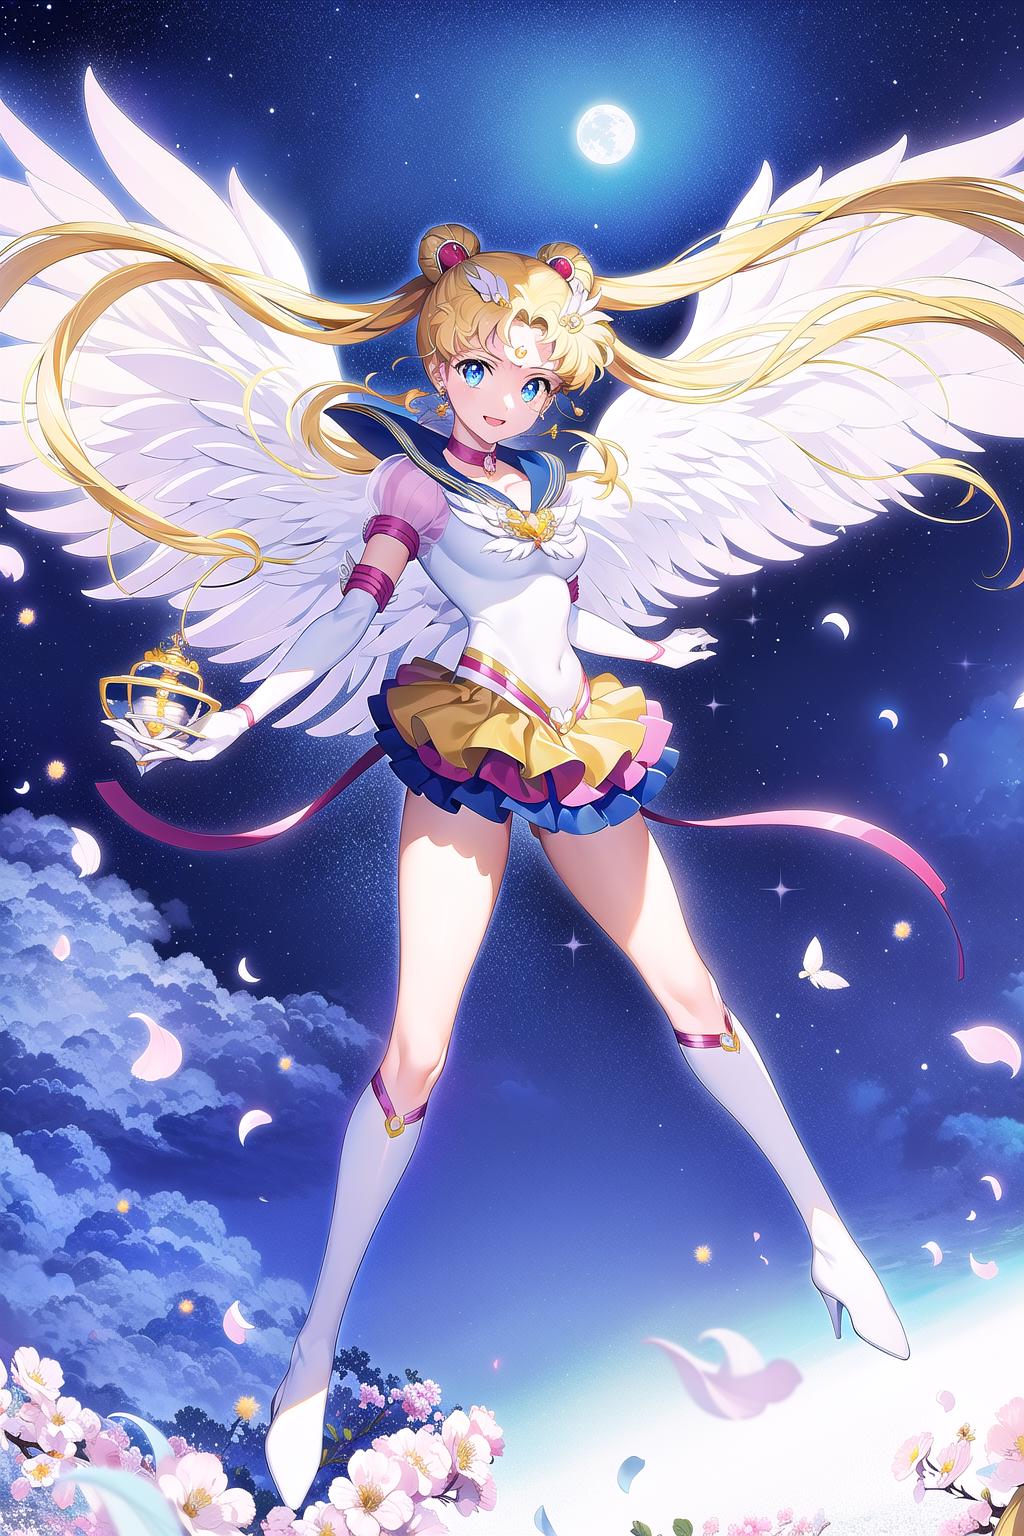 Eternal Sailor Moon (LoRa) image by lostpast